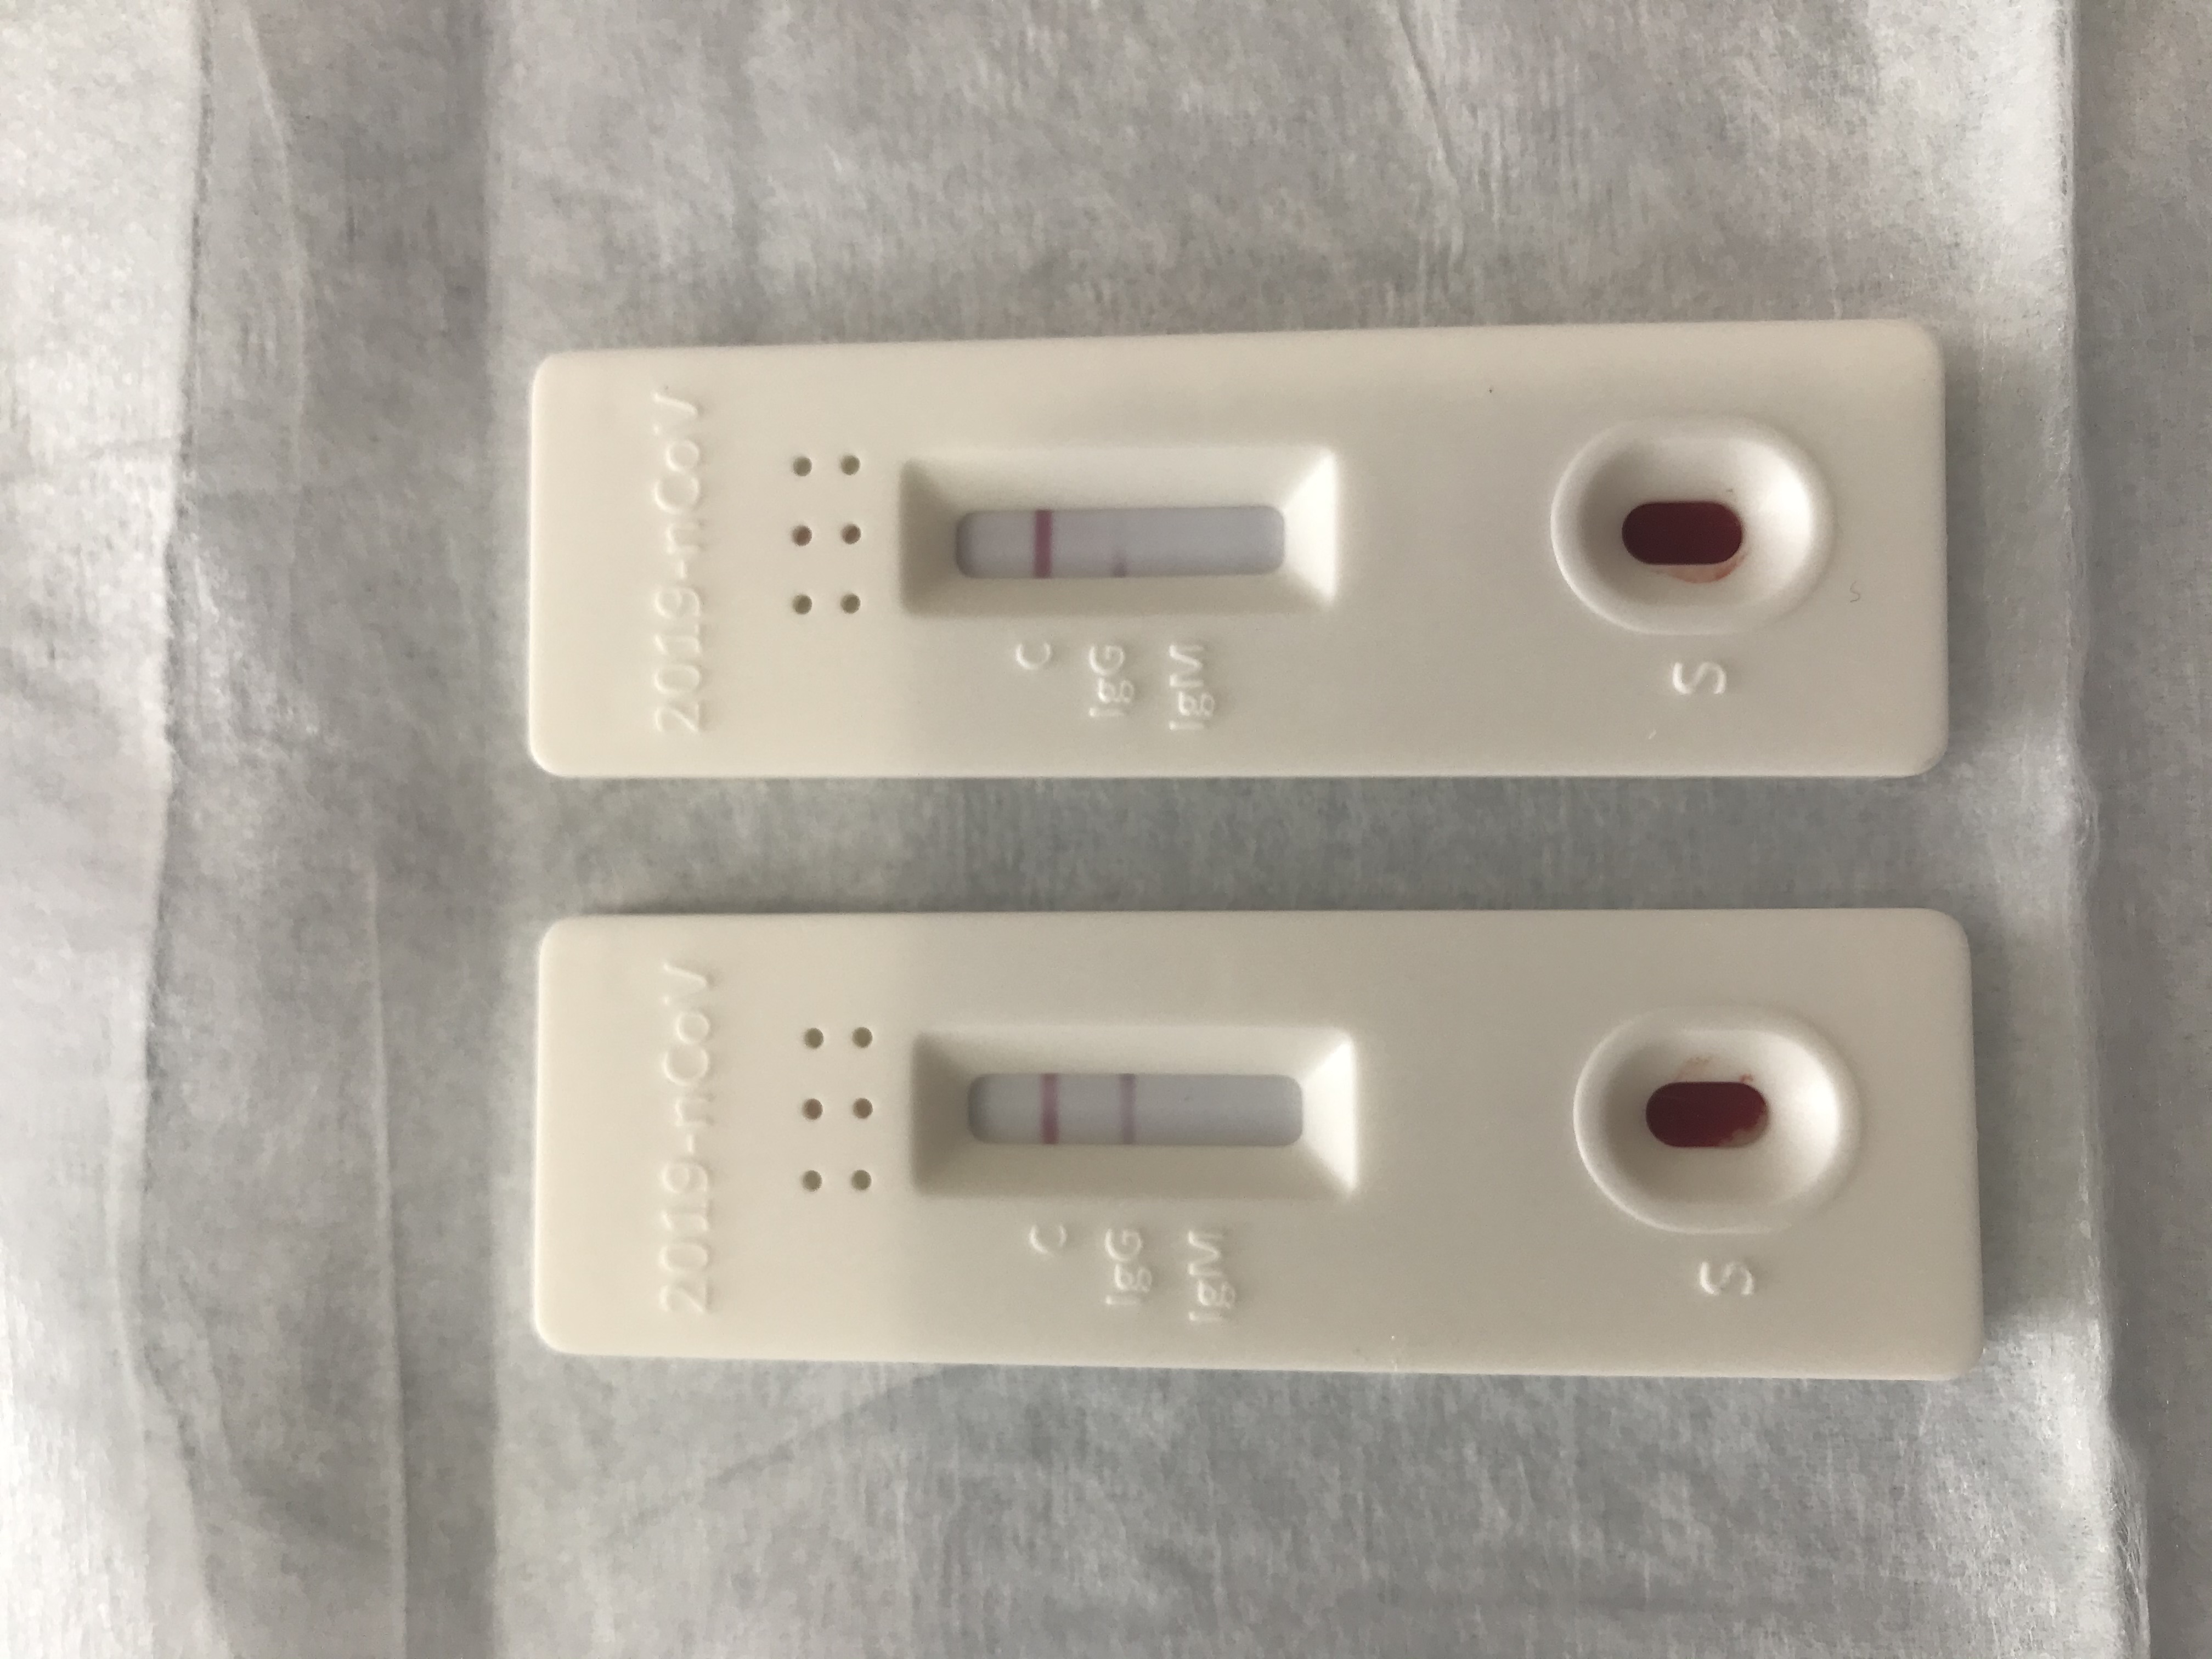 Antibody test kit cartridges cost $30.00 per test